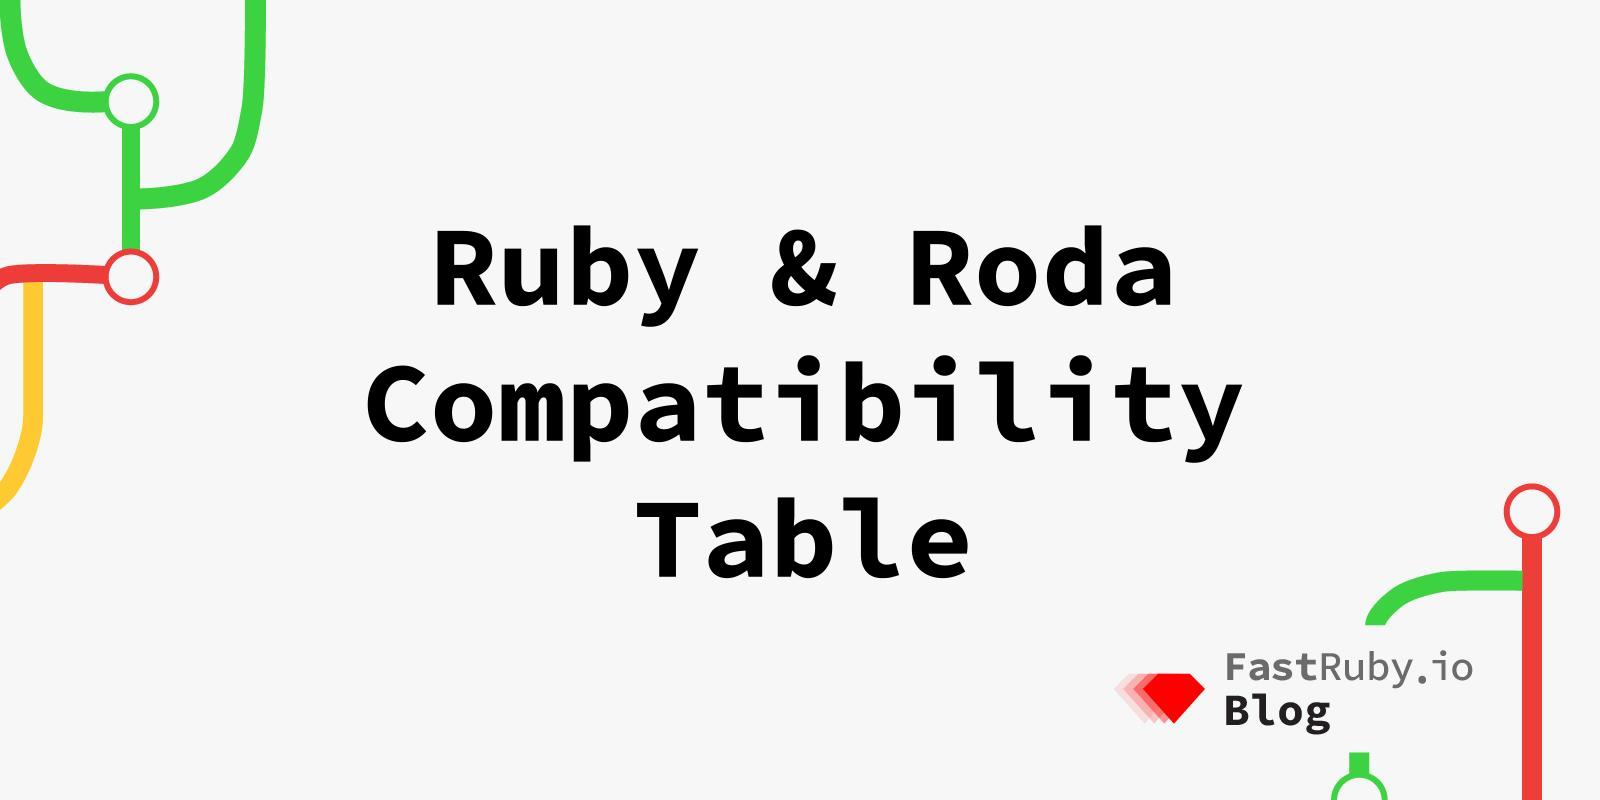 Ruby & Roda Compatibility Table